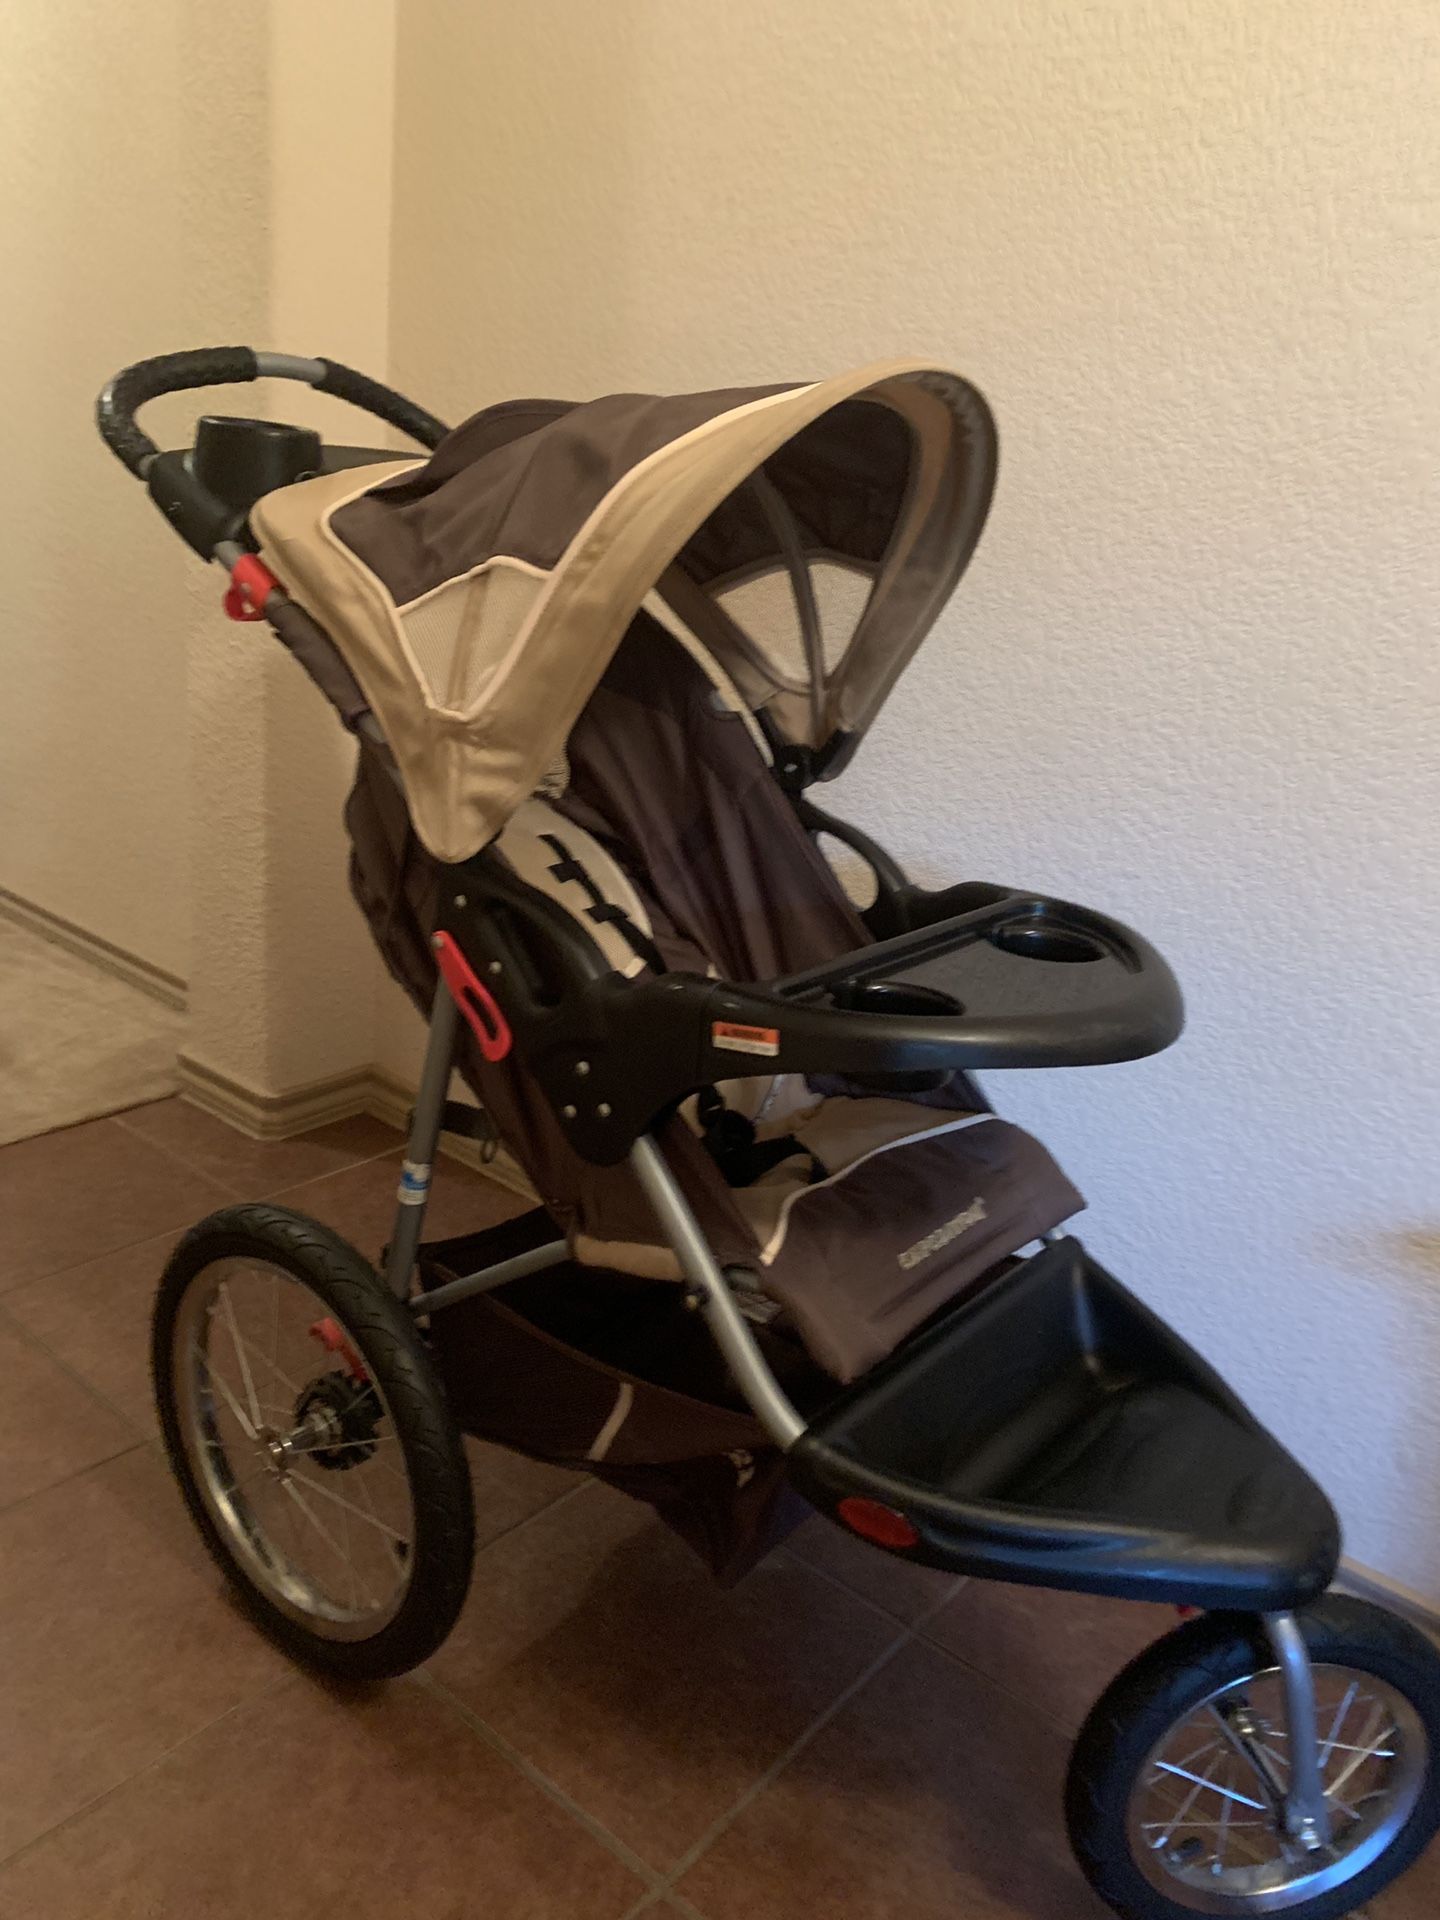 $50 Nice Stroller Baby Trend